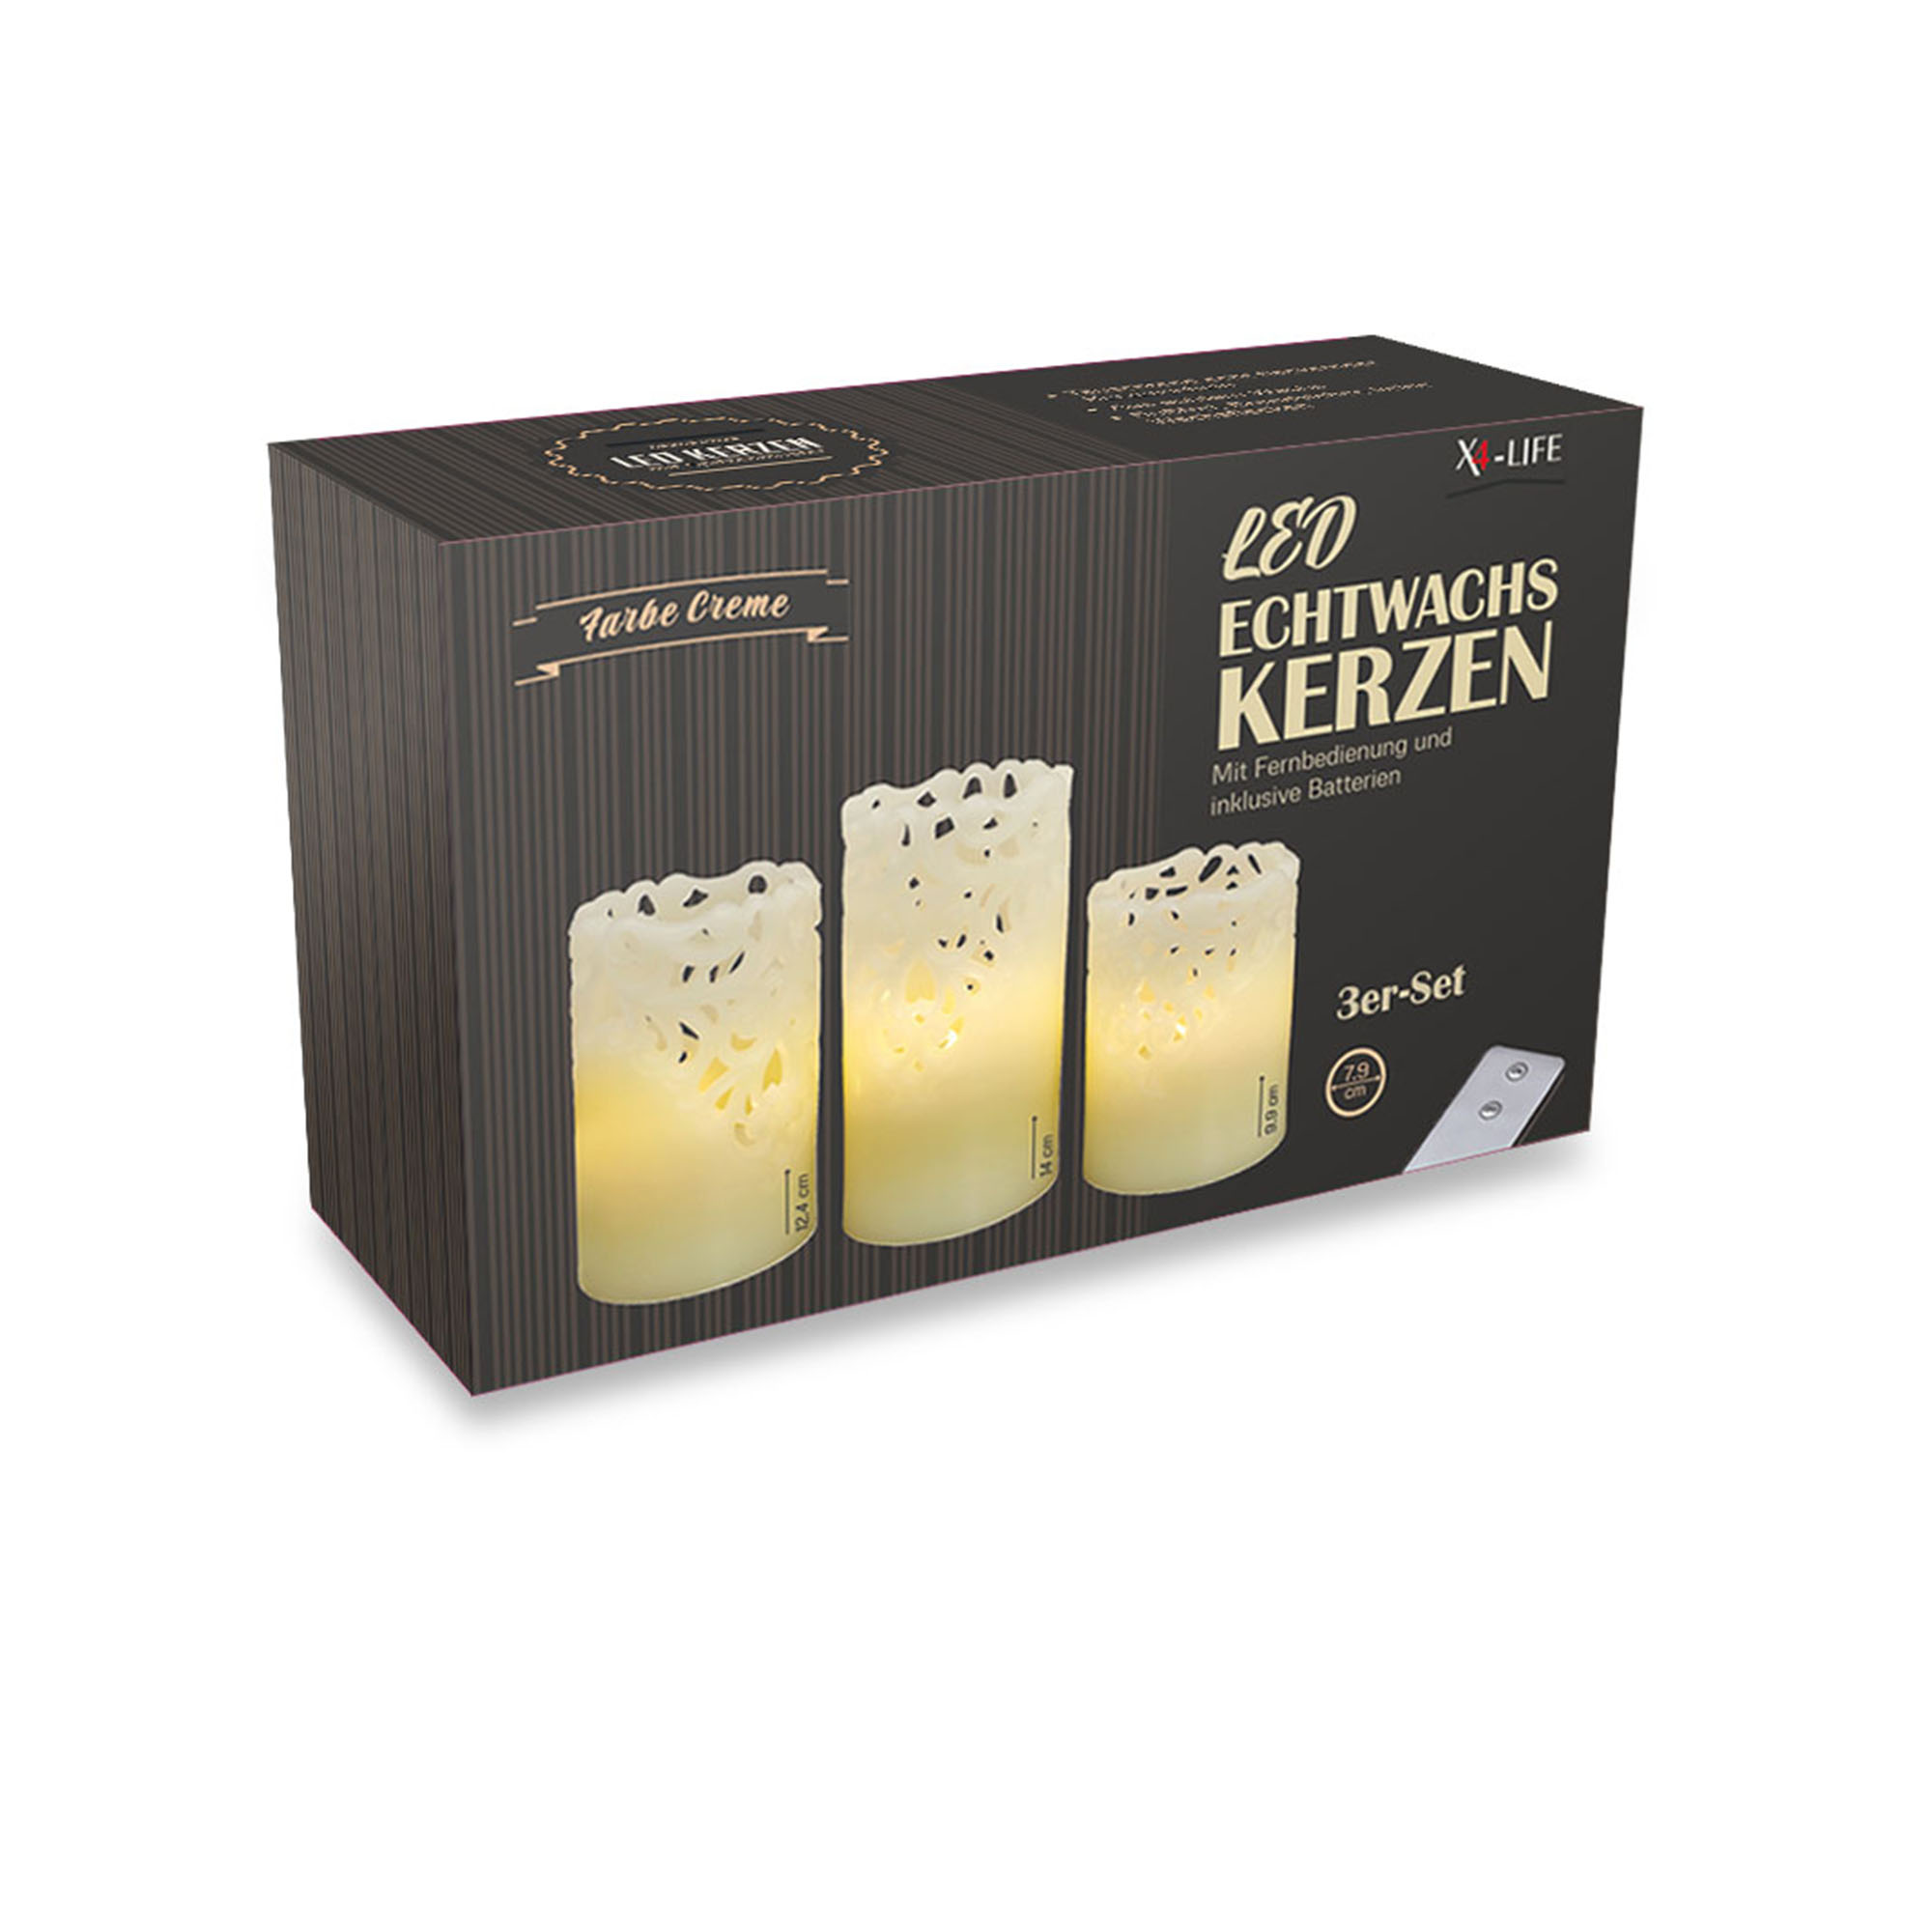 X4-LIFE 3x LED Kerzen mit Spitzenmuster, 3er-Set, Fernbedienung, Echtwachskerzen inkl. Batterien, 10cm/12cm/15cm